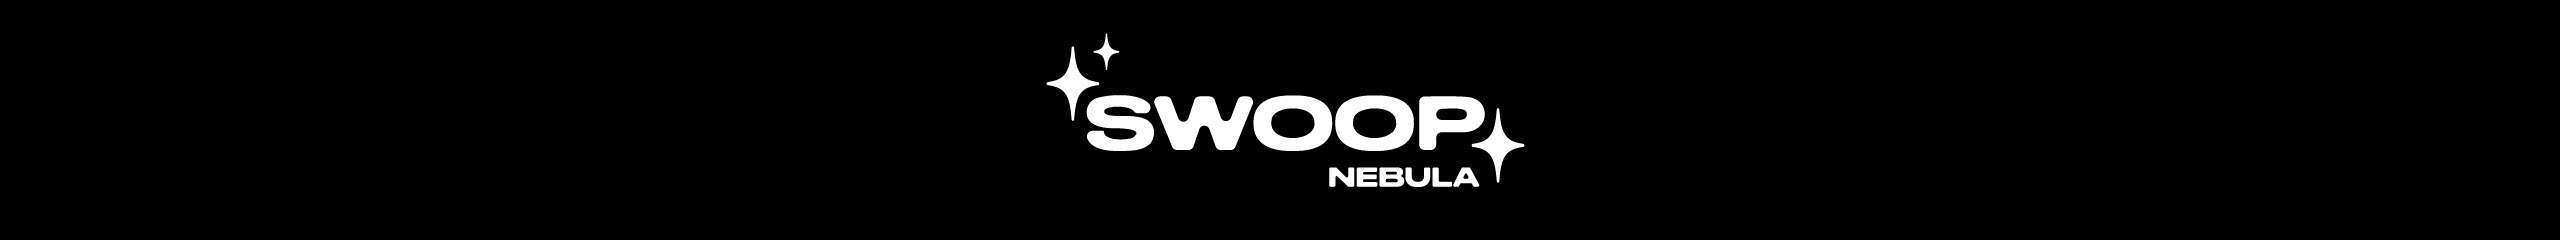 SWOOP NEBULA's profile banner